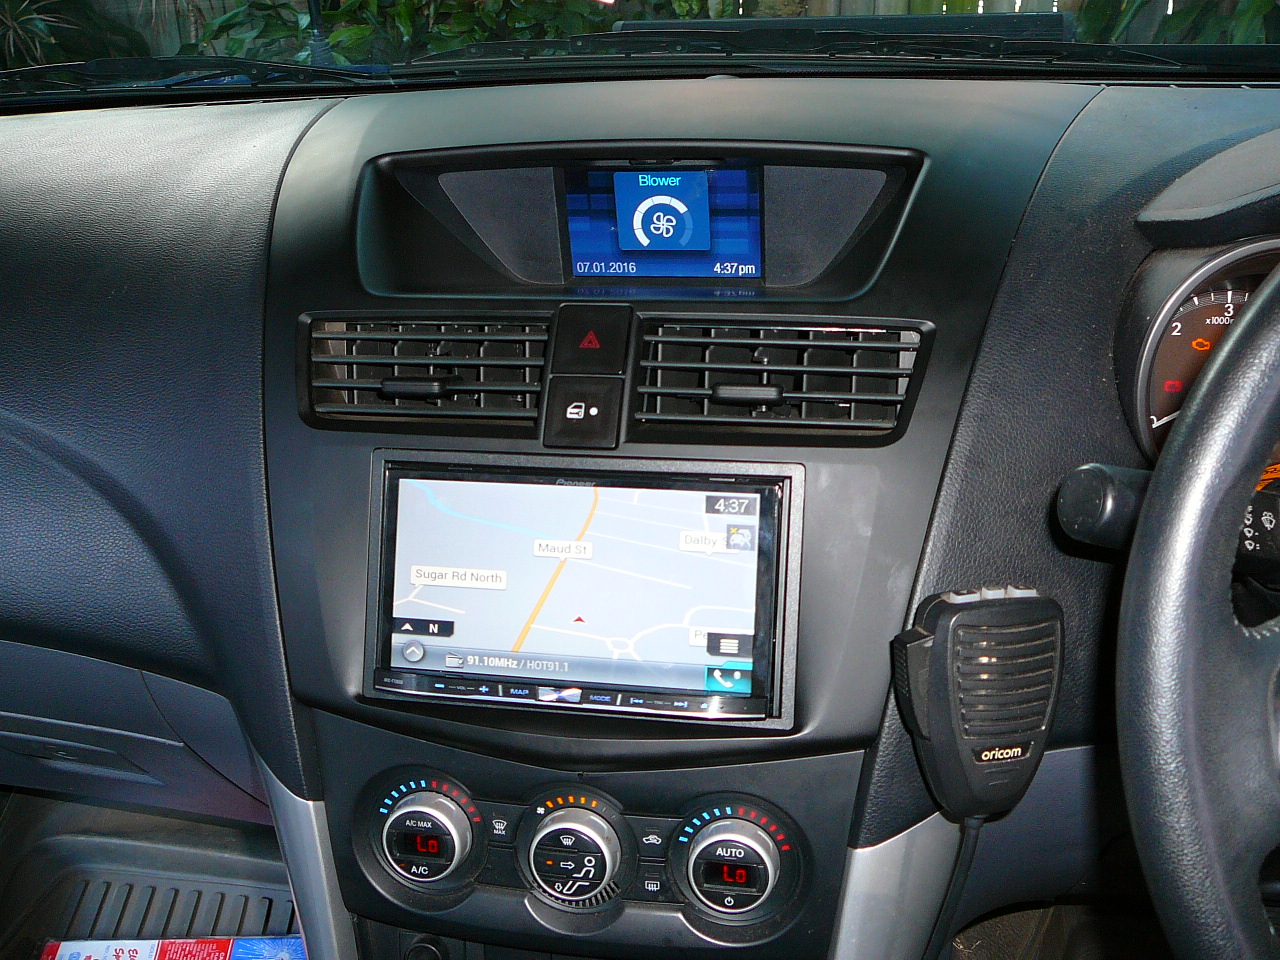 Mazda BT-50 2016, Pioneer AVIC-F70DAB In Dash GPS Navigation with Apple Car Play